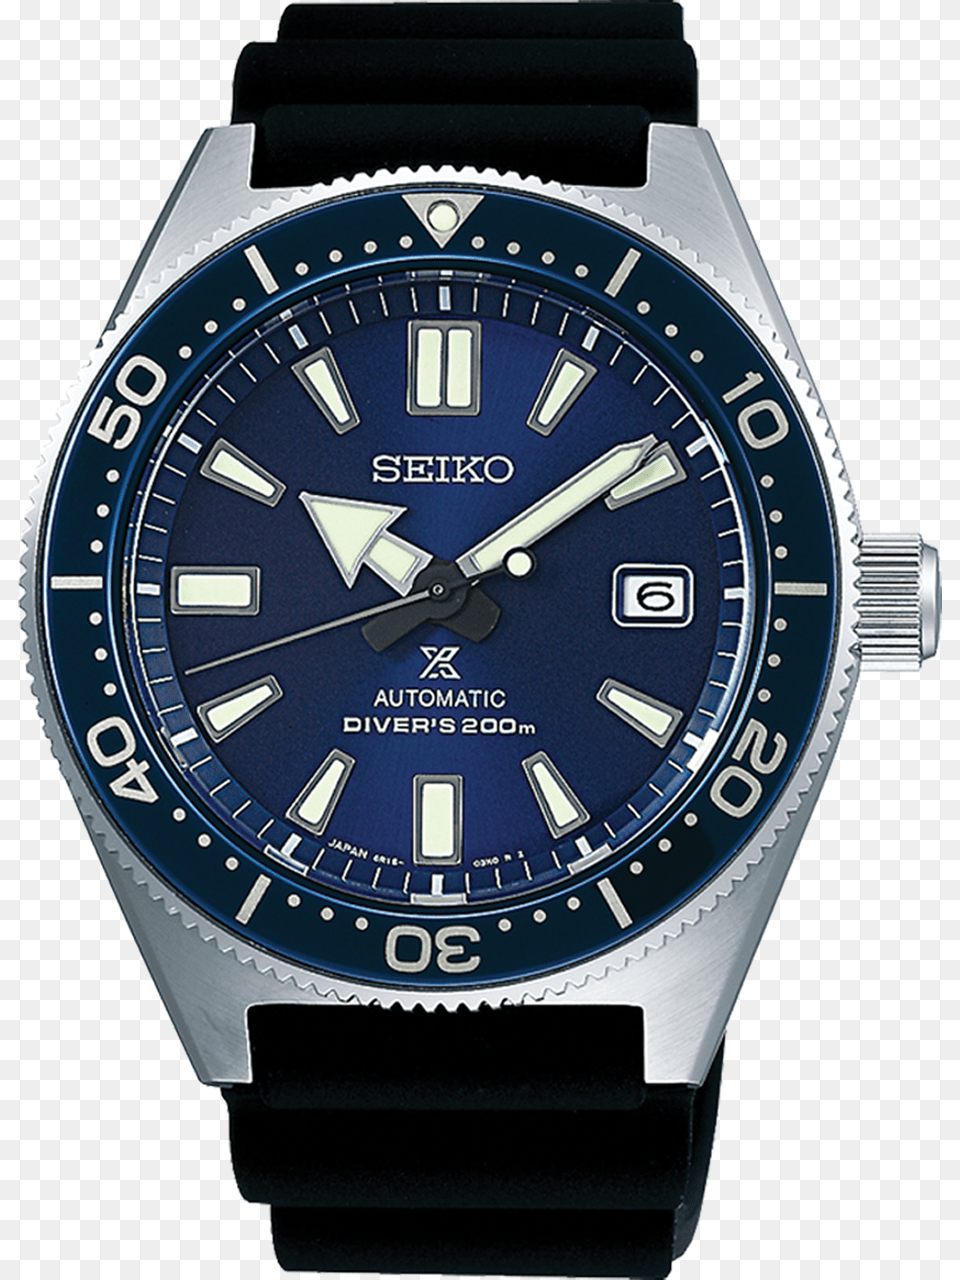 Seiko Prospex Divers Rubber Strap, Arm, Body Part, Person, Wristwatch Png Image